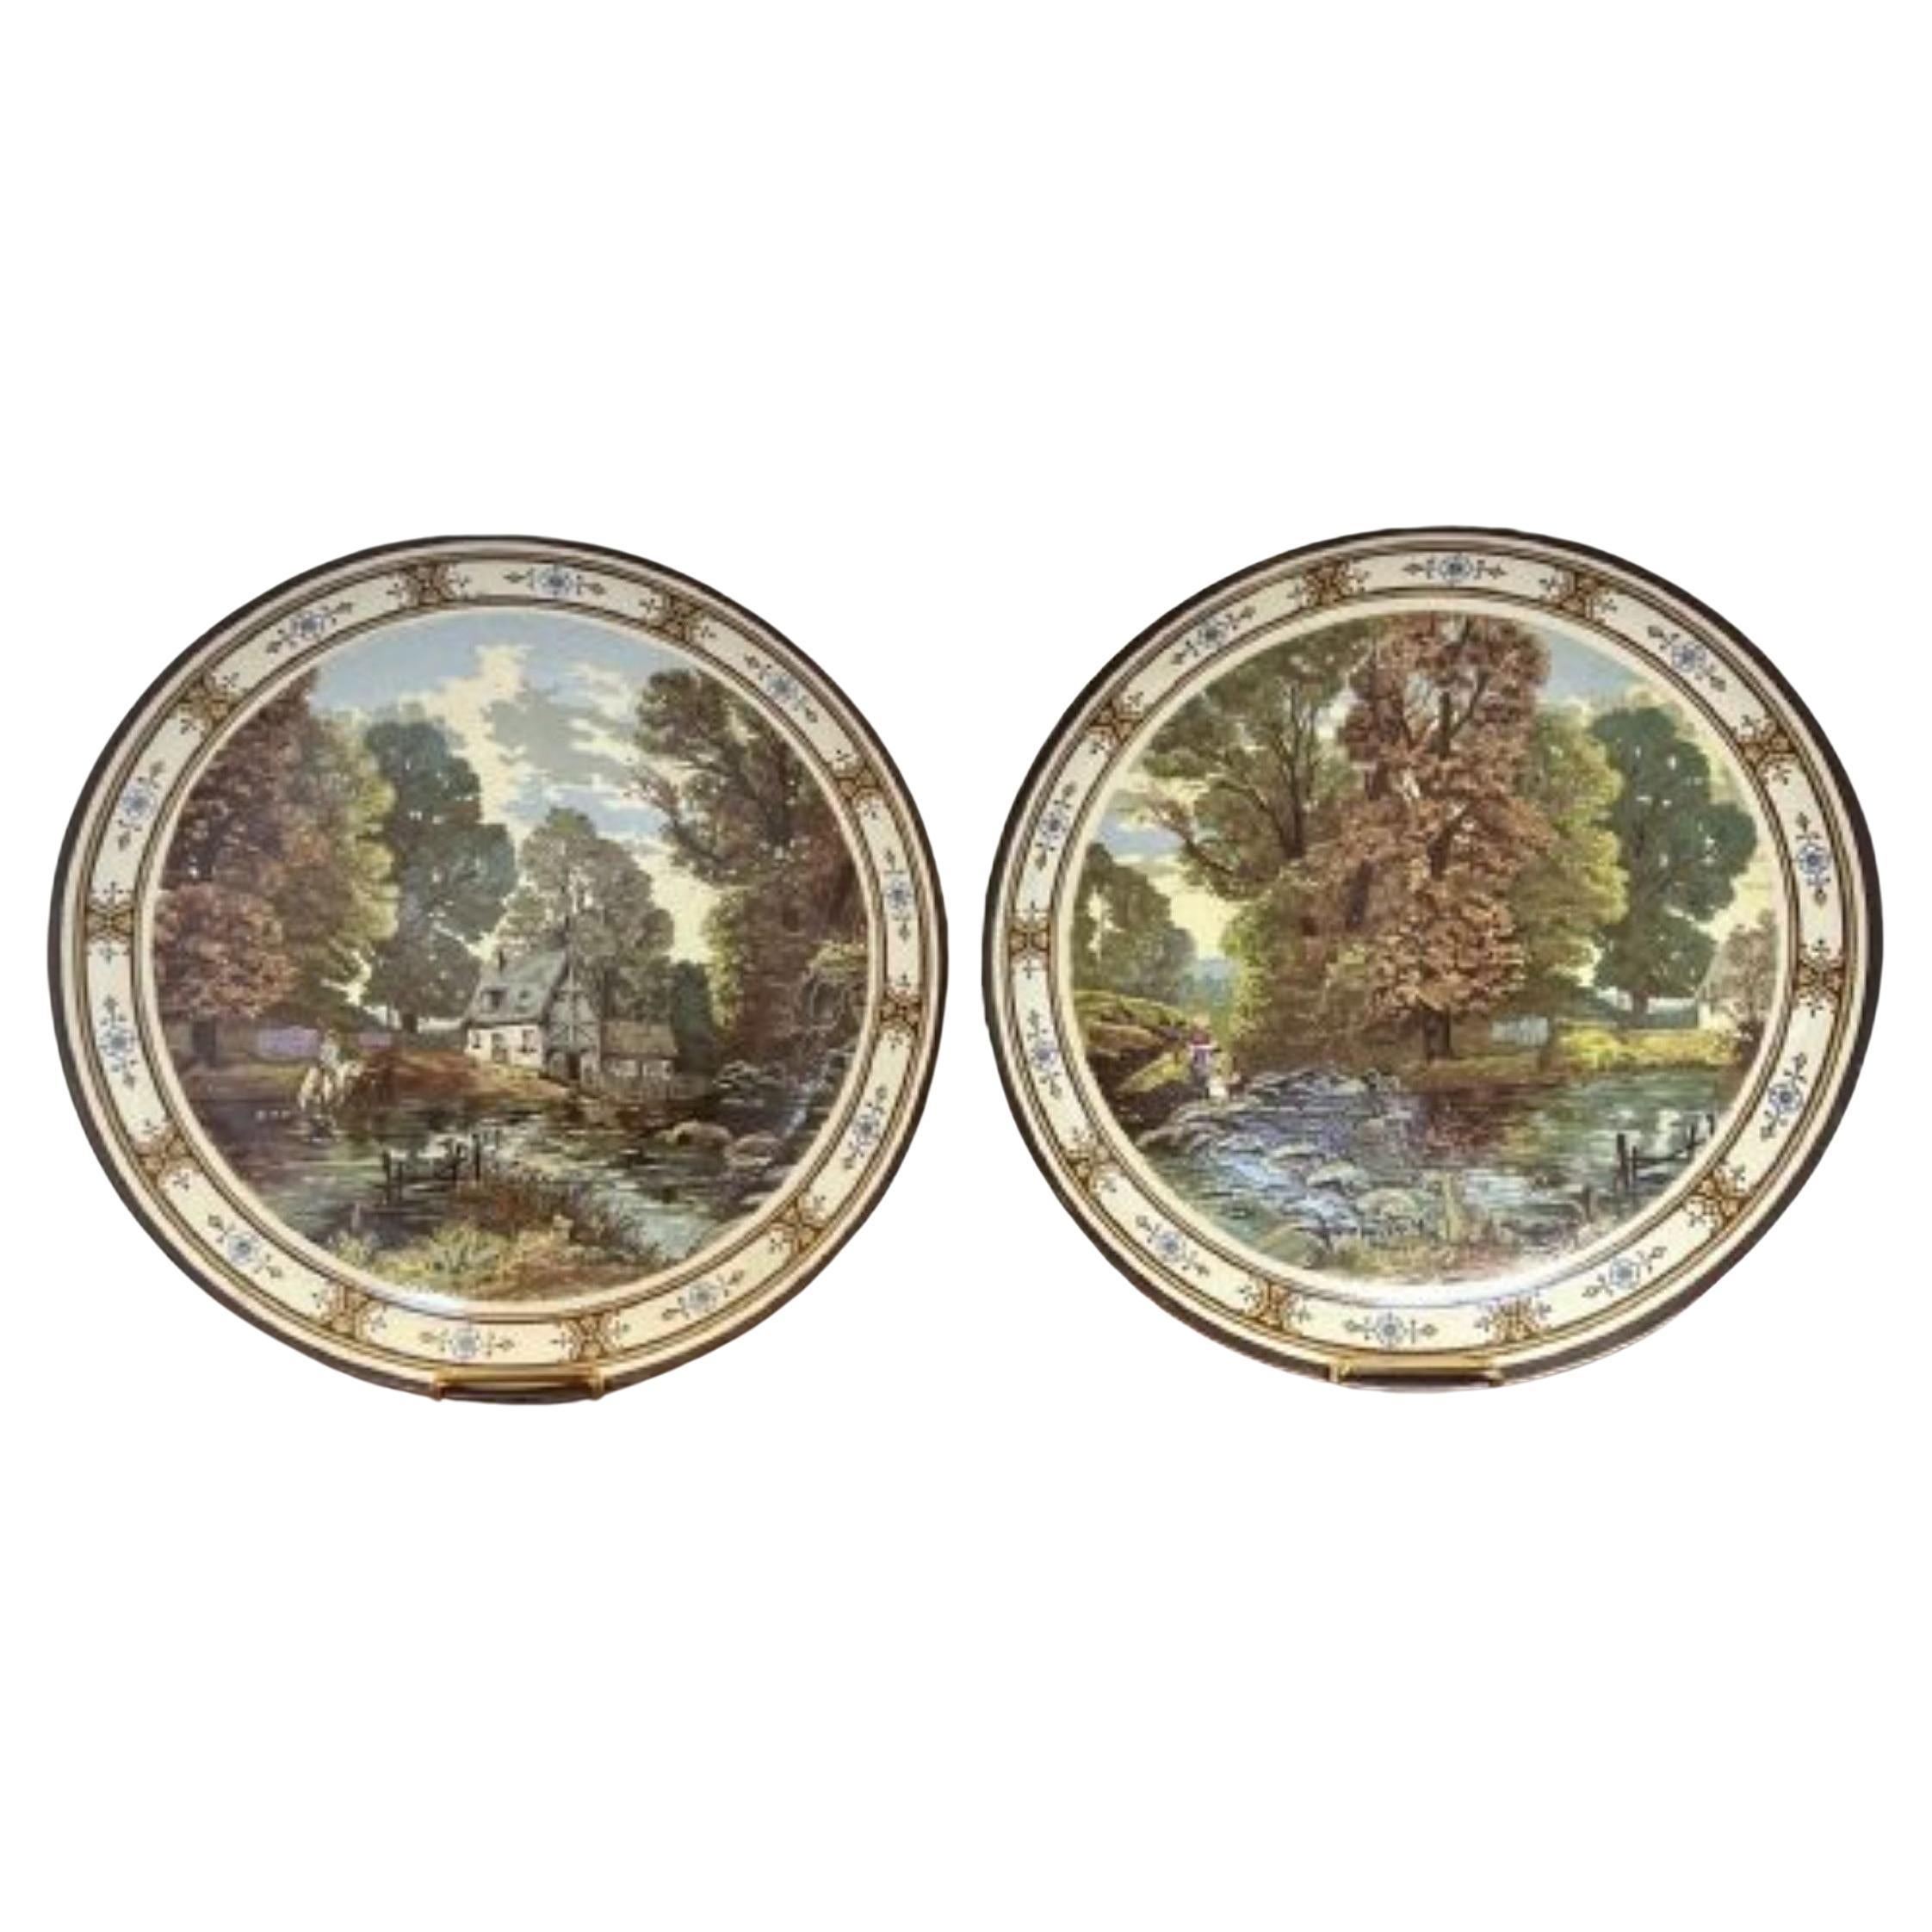 Wonderful pair of large 19th century Minton Plates